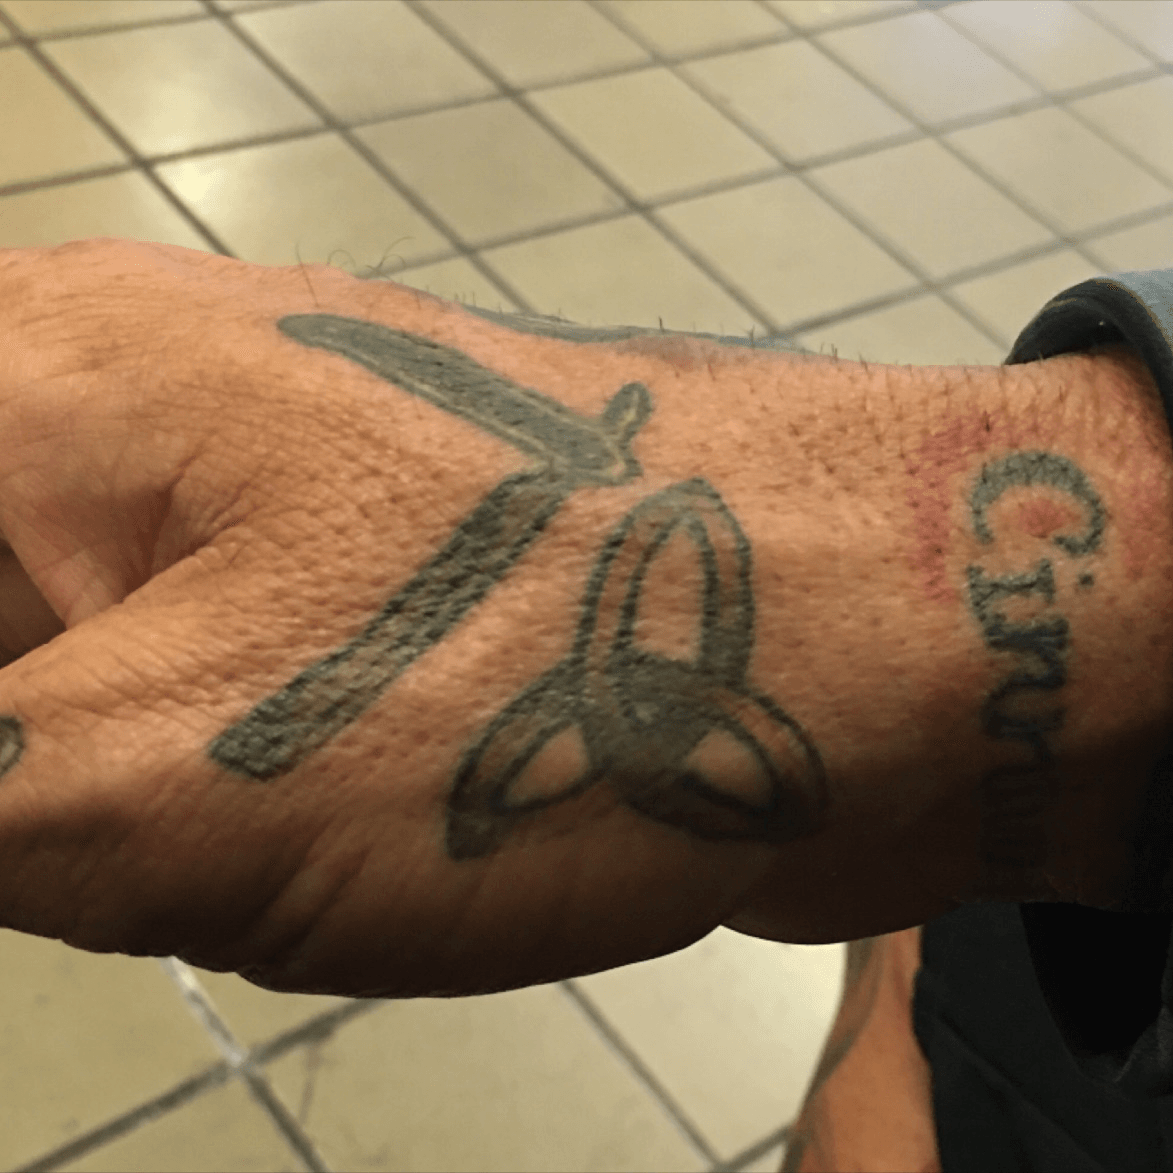 Tattooing a Ninja  Dazed